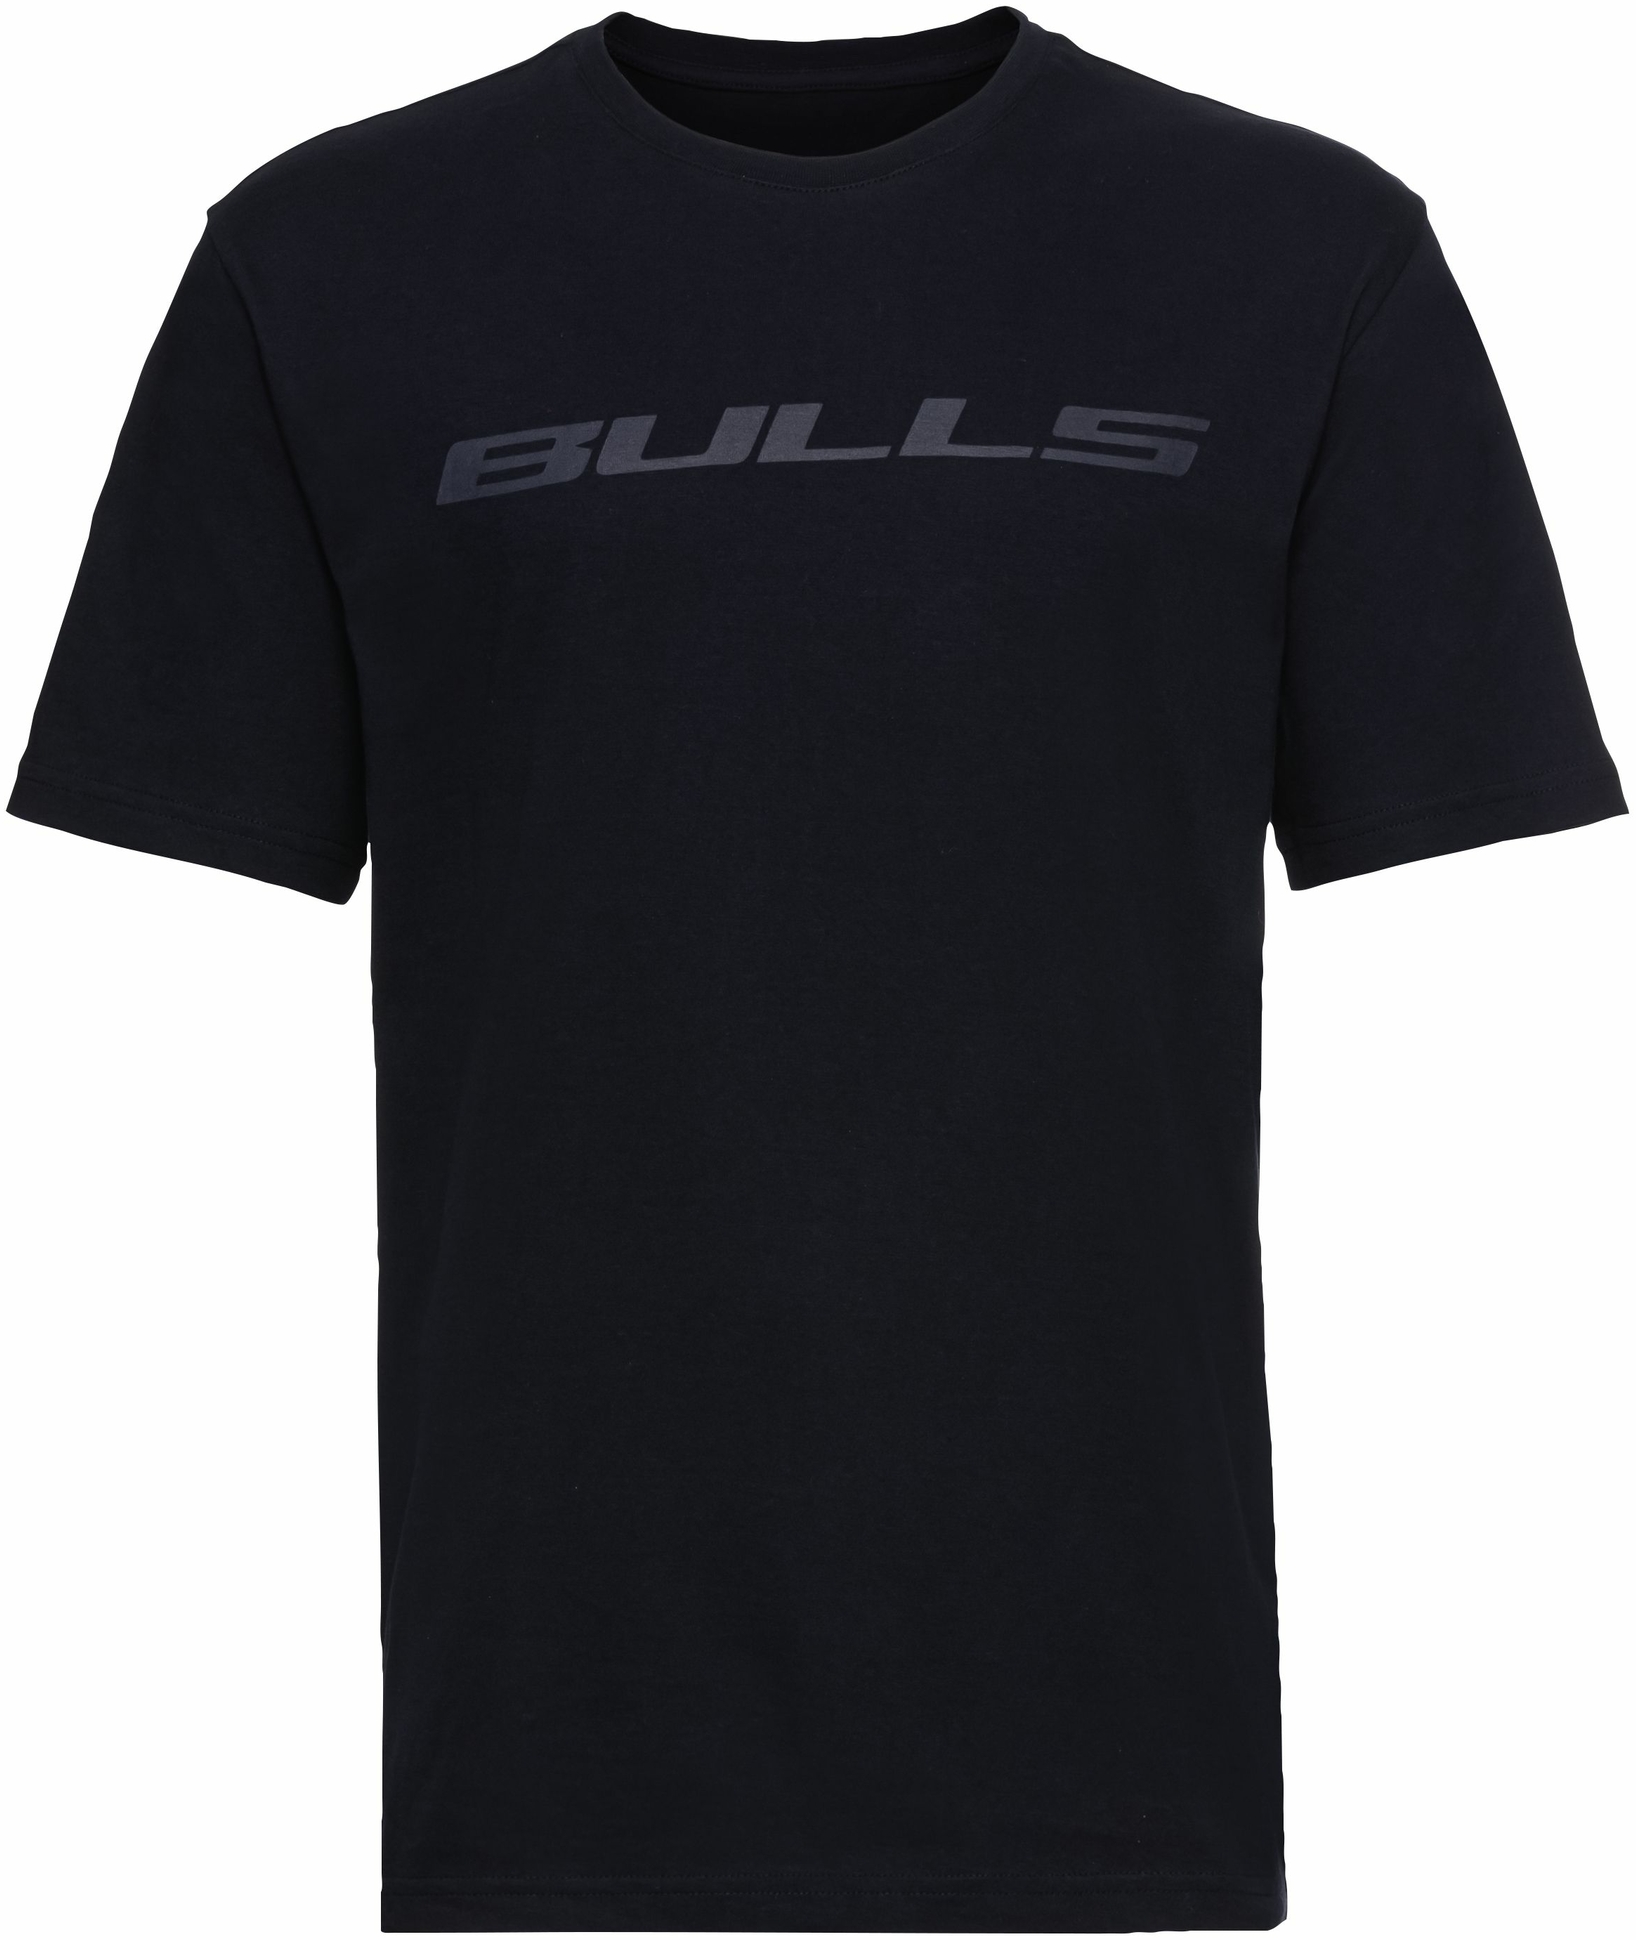 Bekleidung/T-Shirts: Bulls BULLS Herren T-Shirt Lifestyle M 